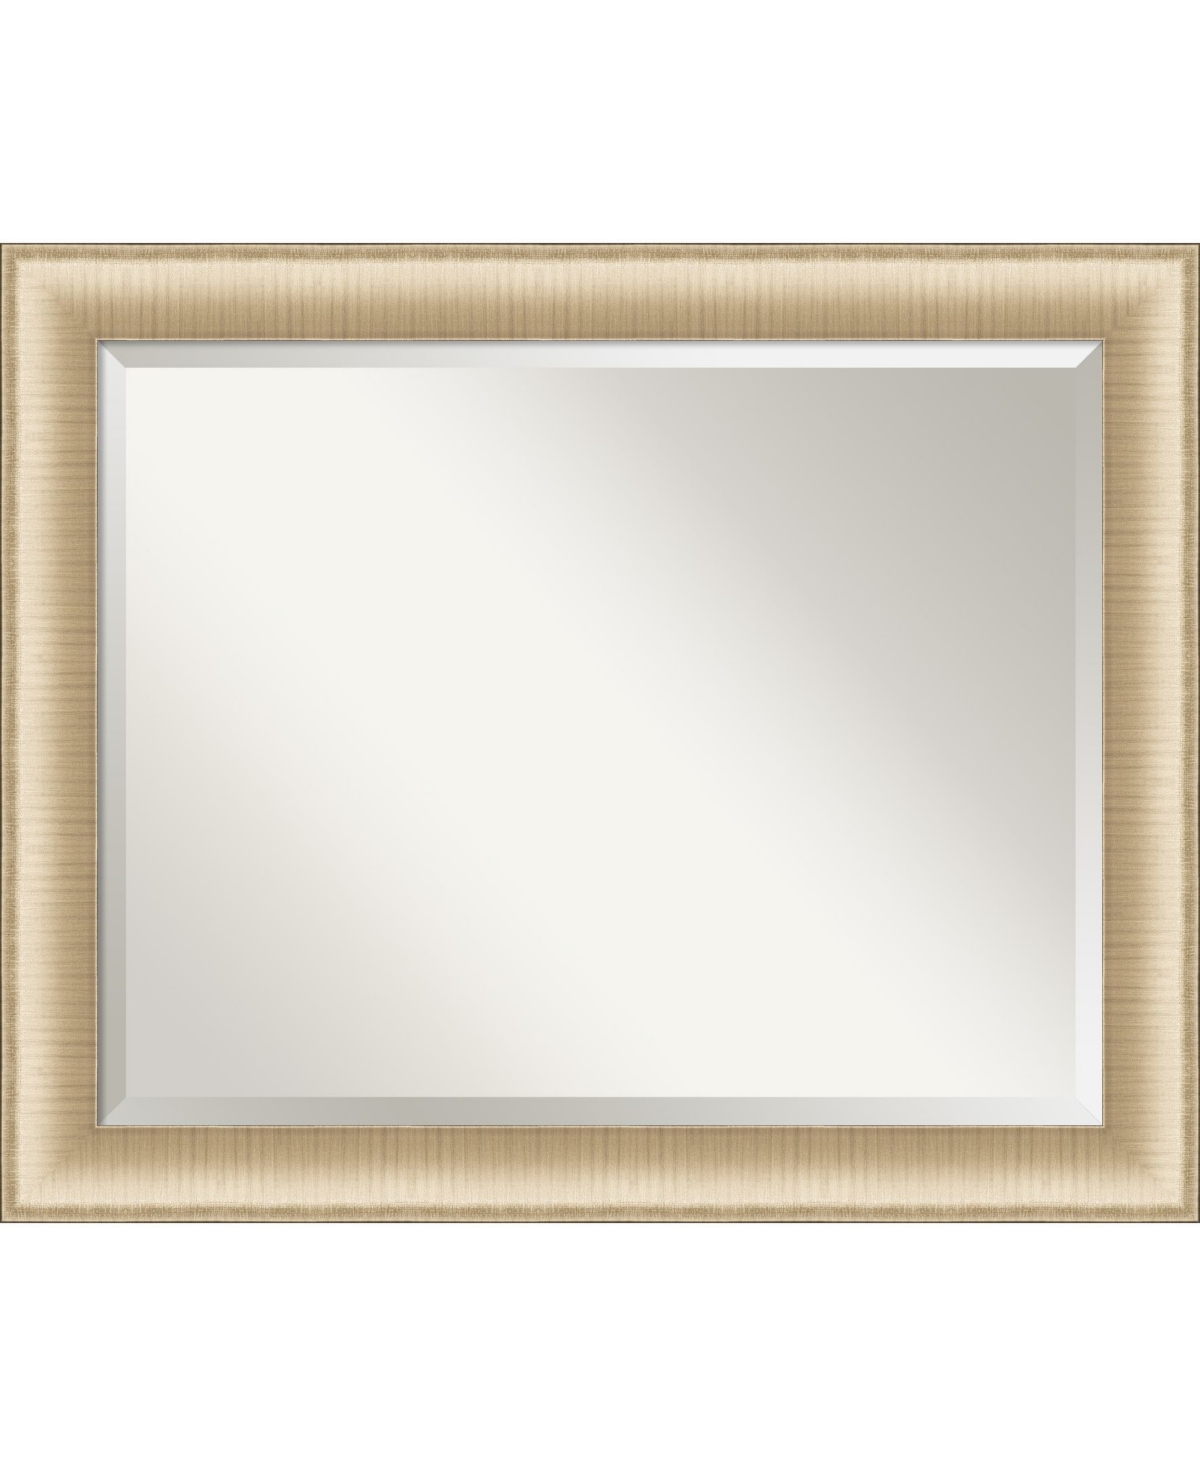 Amanti Art Elegant Brushed Honey Framed Bathroom Vanity Wall Mirror, 32.75